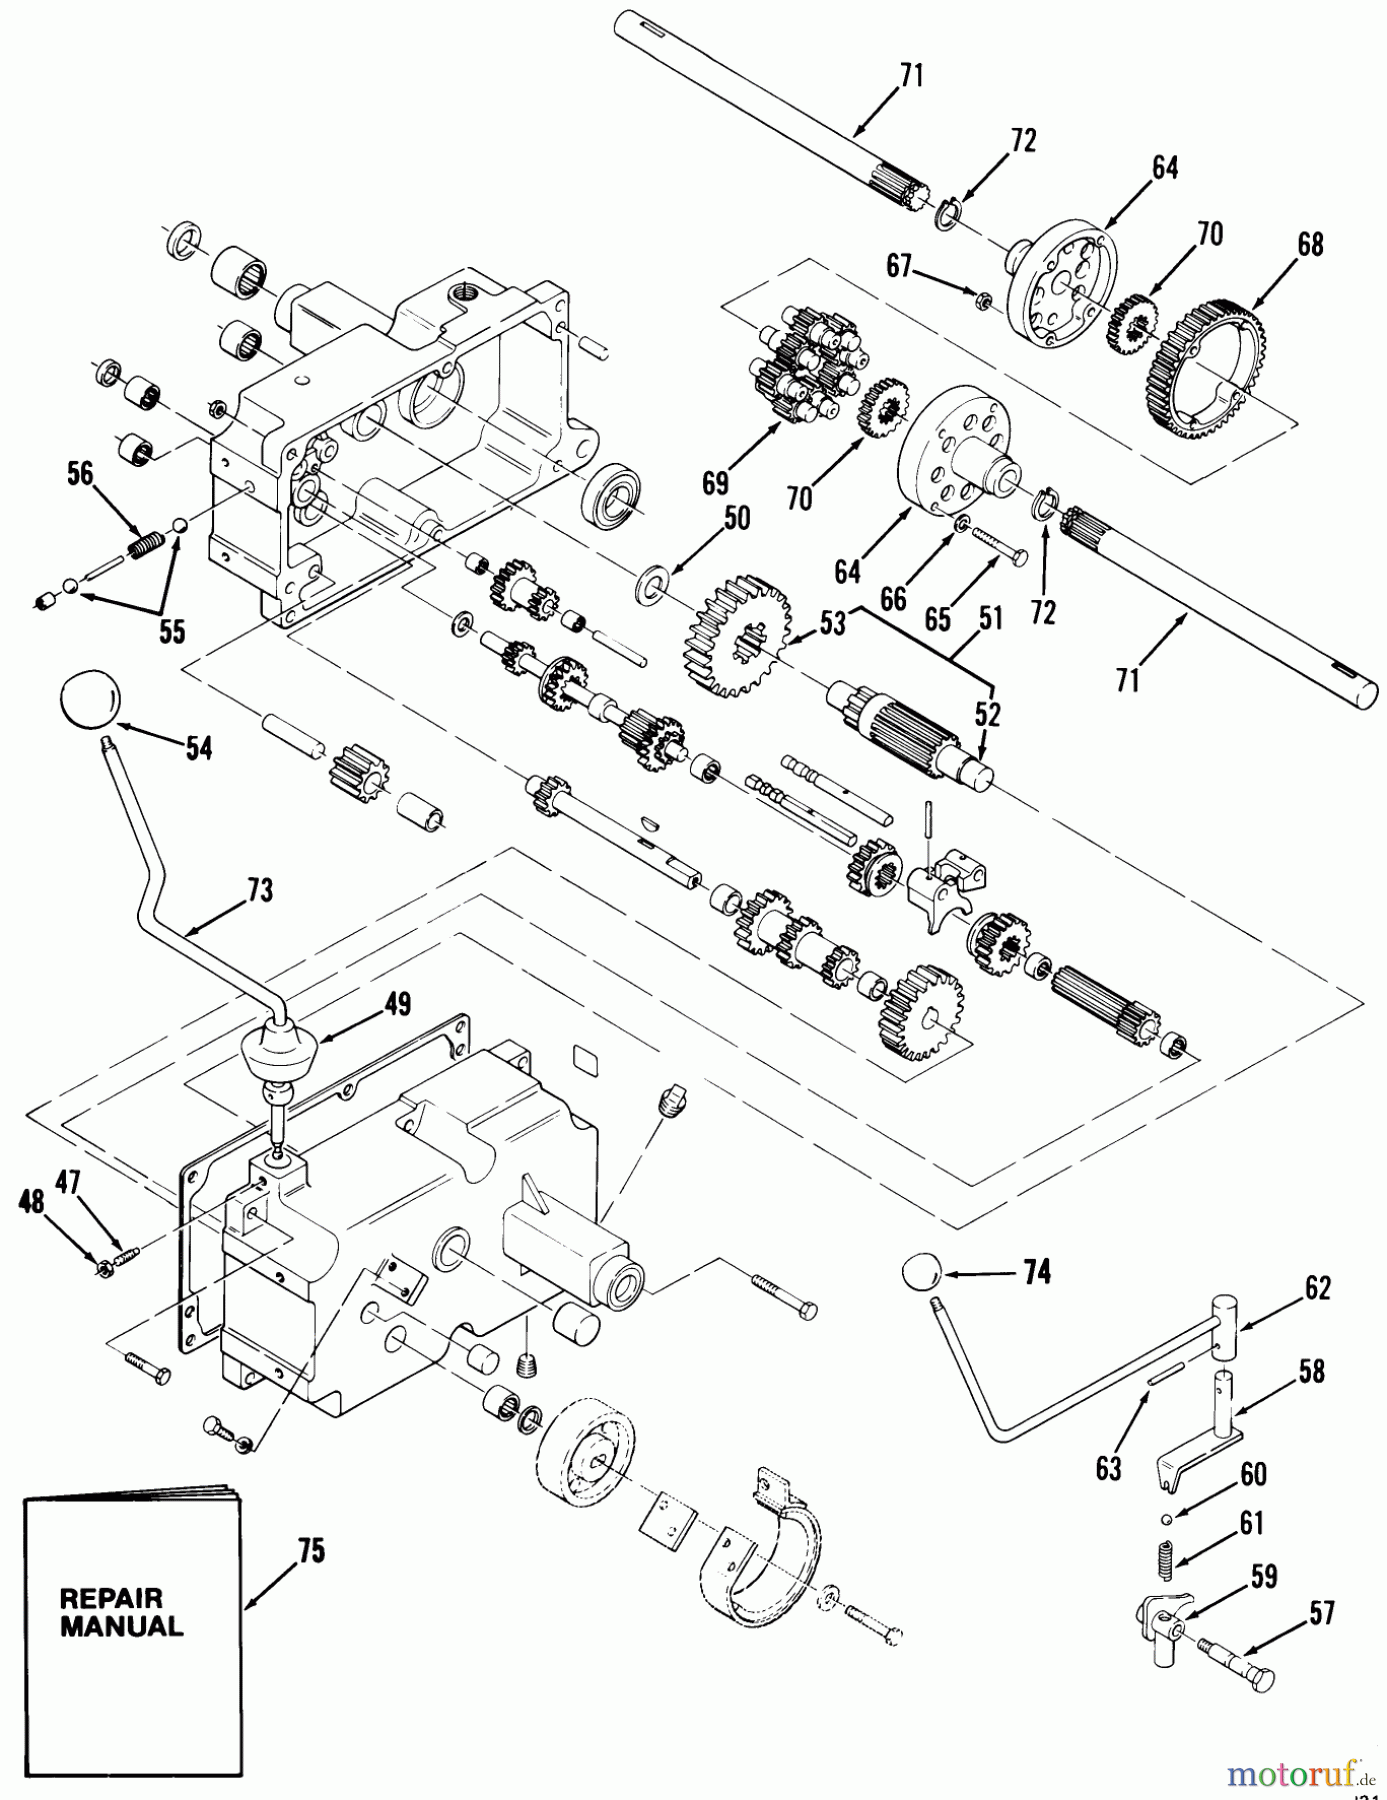  Toro Neu Mowers, Lawn & Garden Tractor Seite 1 01-17KE03 (C-175) - Toro C-175 Twin Automatic Tractor, 1983 MECHANICAL TRANSMISSION-8 SPEED #2